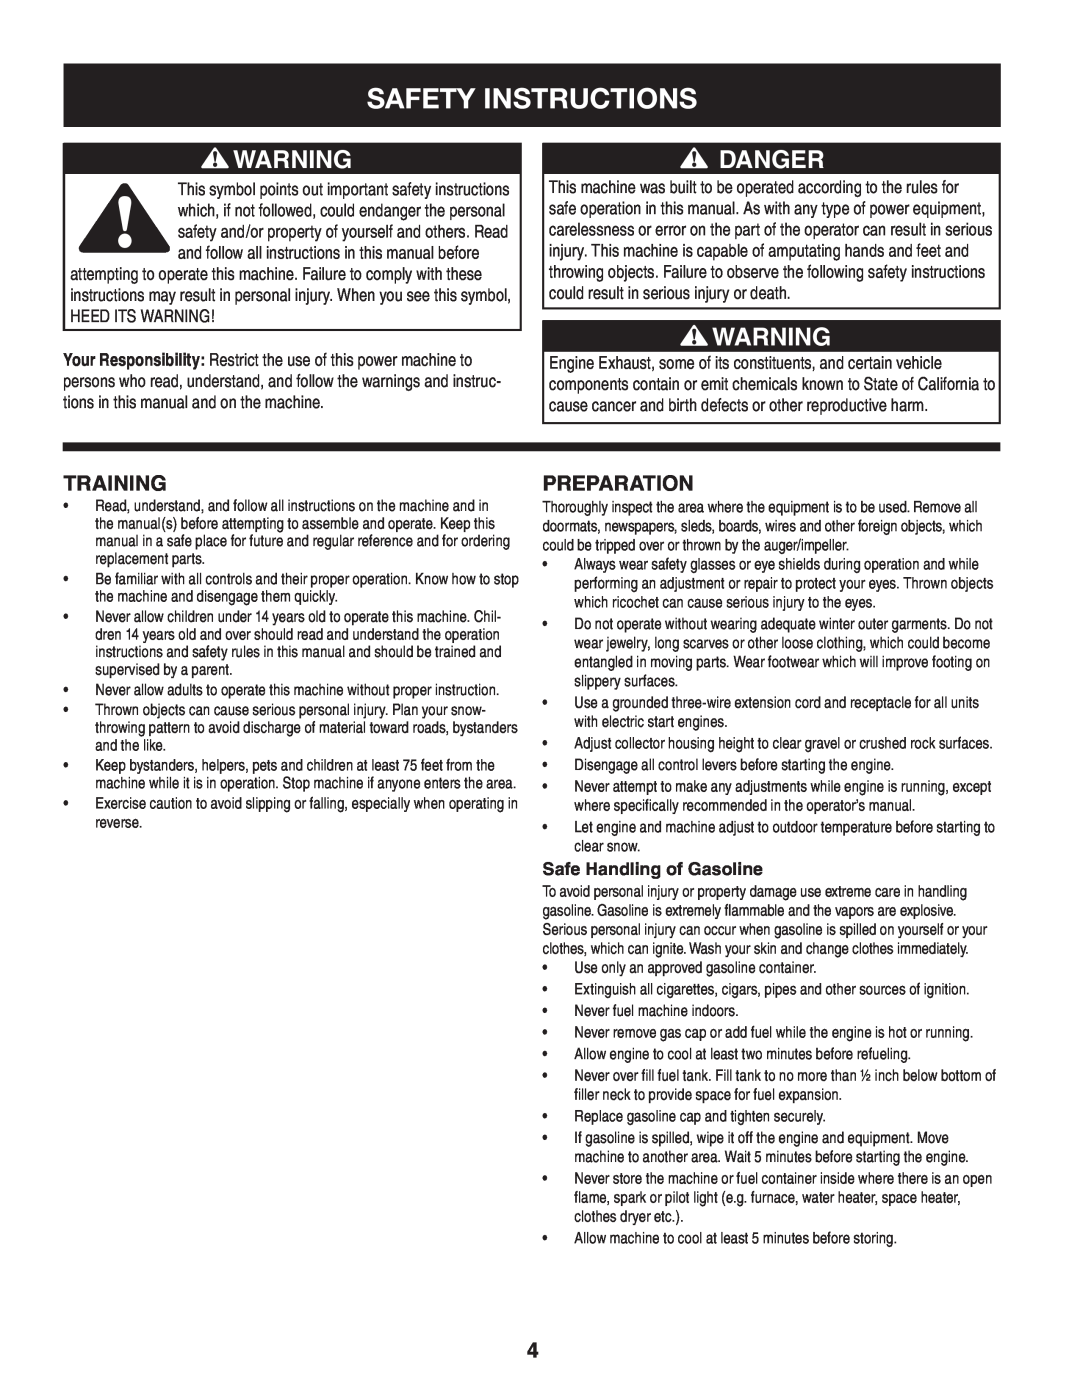 Craftsman 247.8819 operating instructions Safety Instructions, Danger, Training, Preparation 